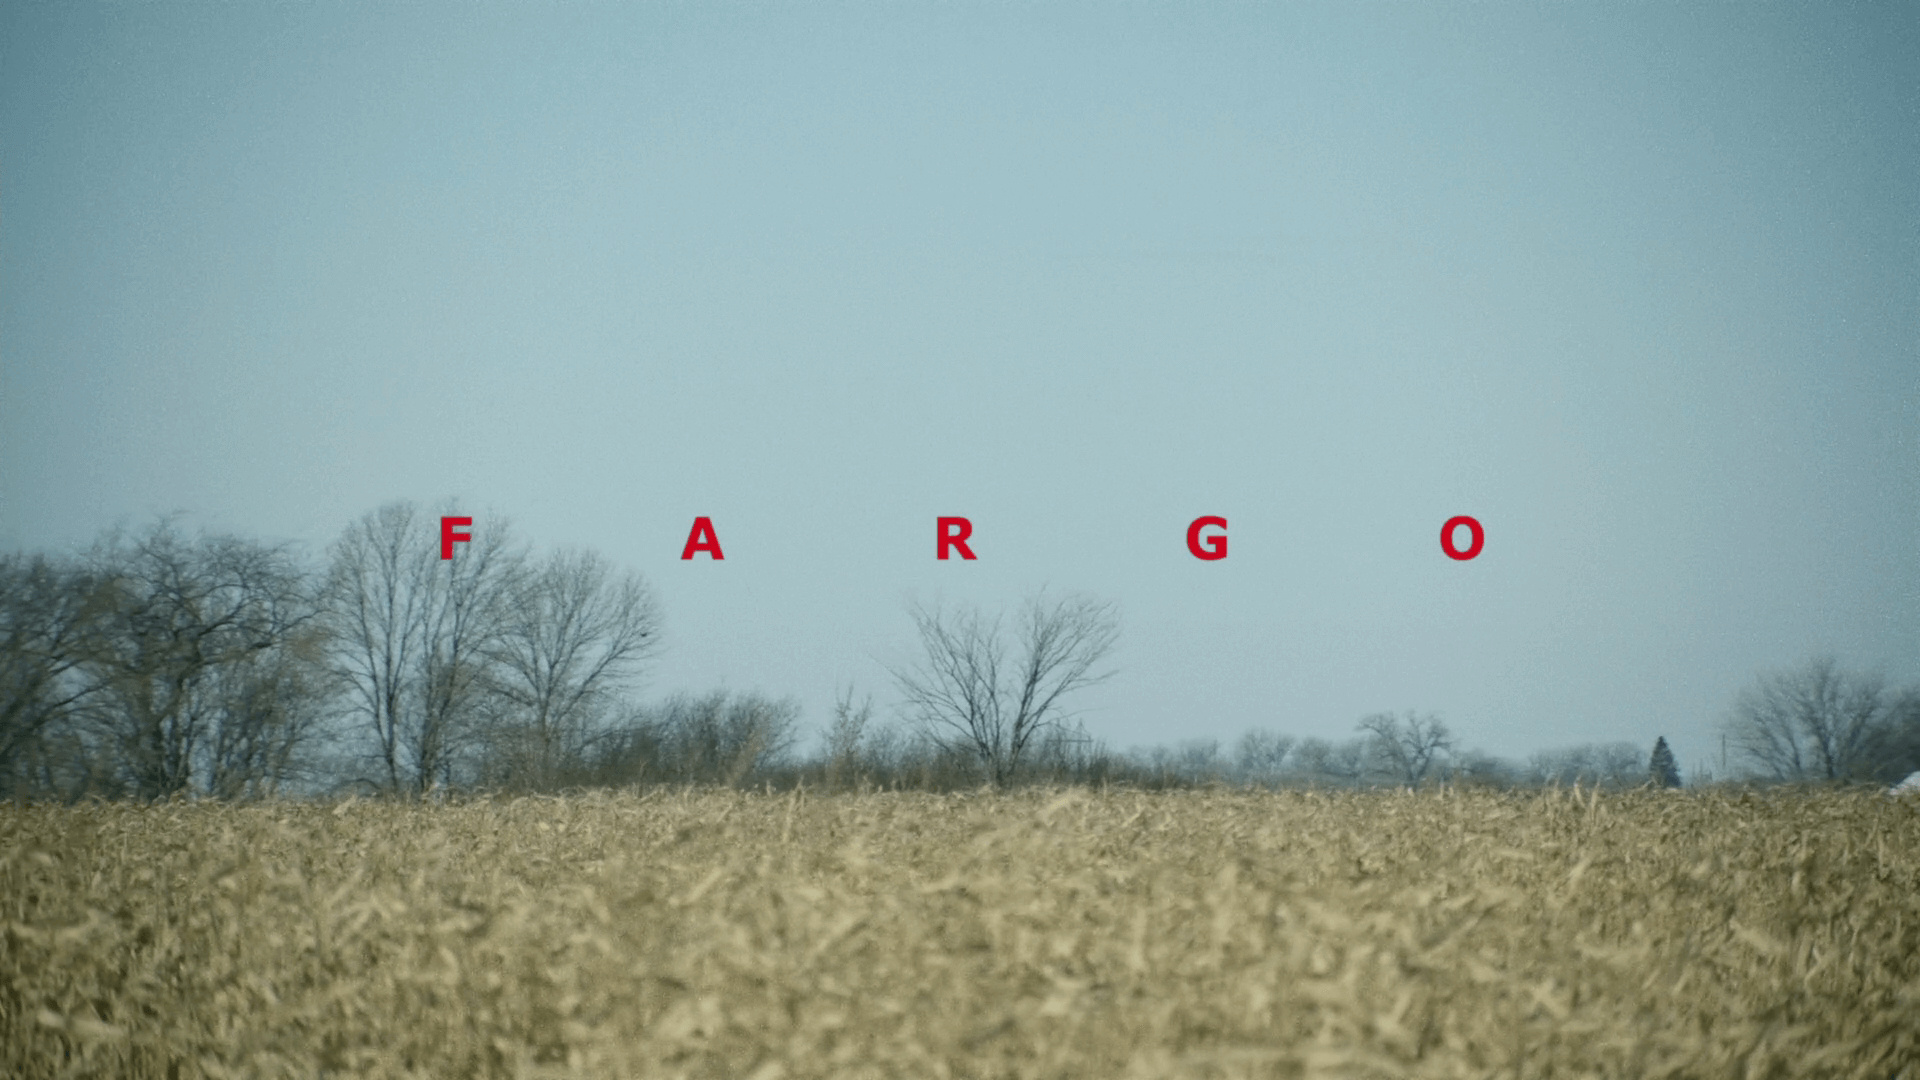 Fargo wallpapers, Top free backgrounds, 1920x1080 Full HD Desktop